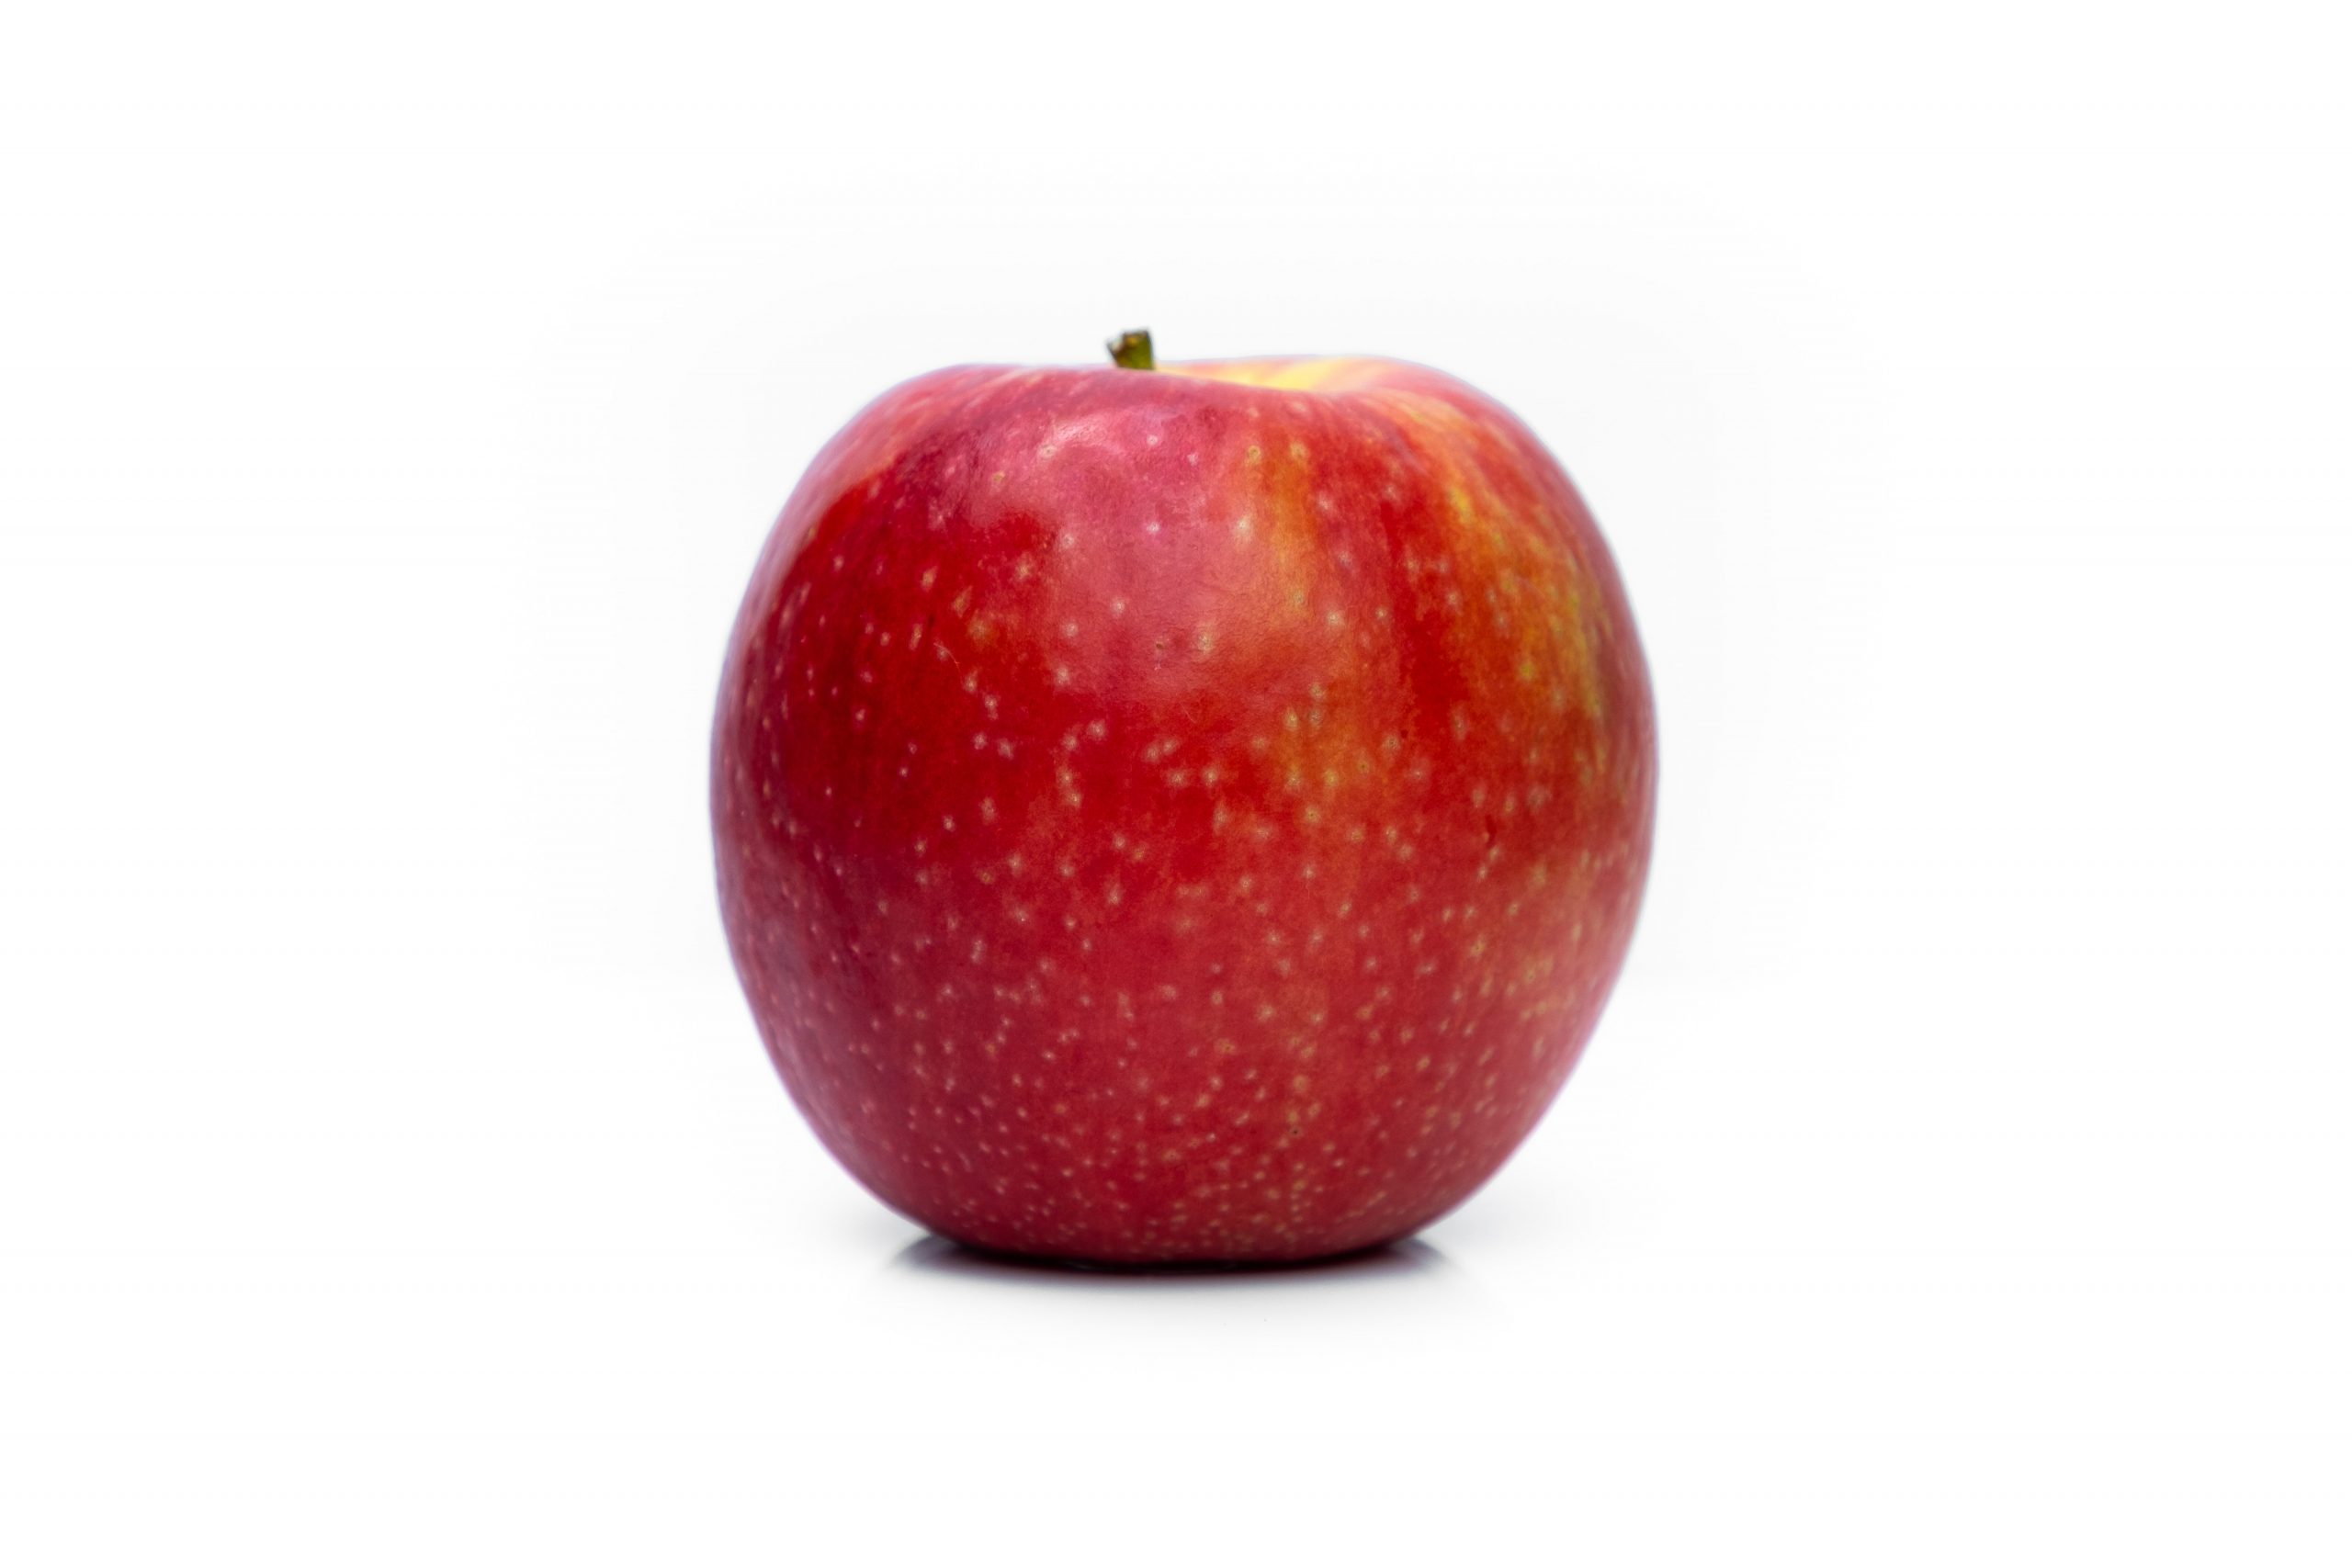 Apple 'Honeycrisp', Dwarf — Green Acres Nursery & Supply